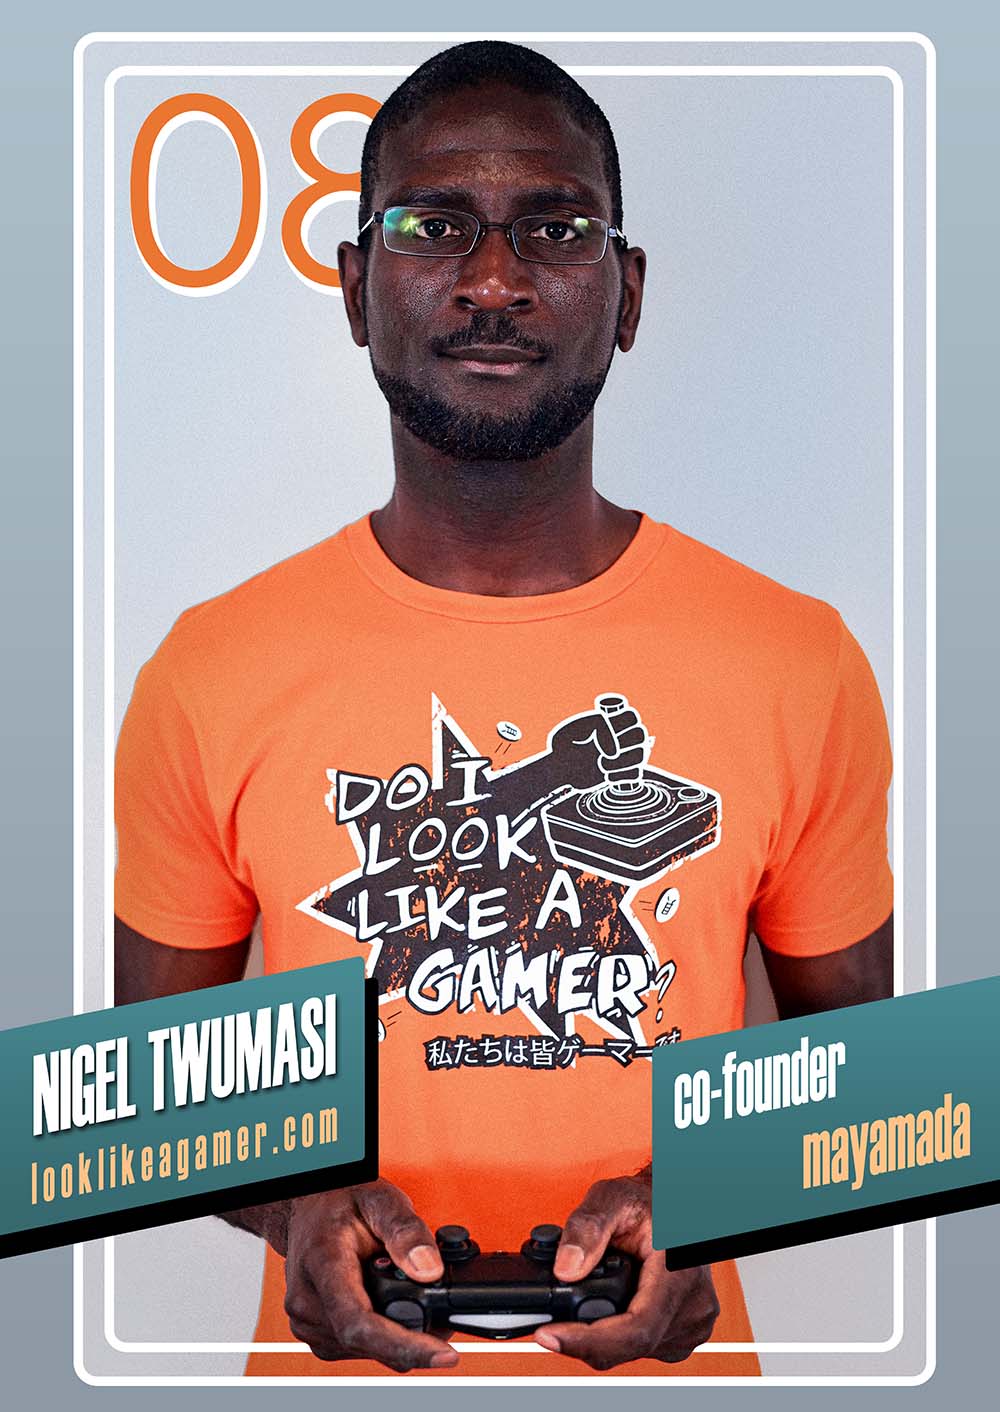 Nigel Photo in mayamada "Do I Look Like A Gamer?" Campaign